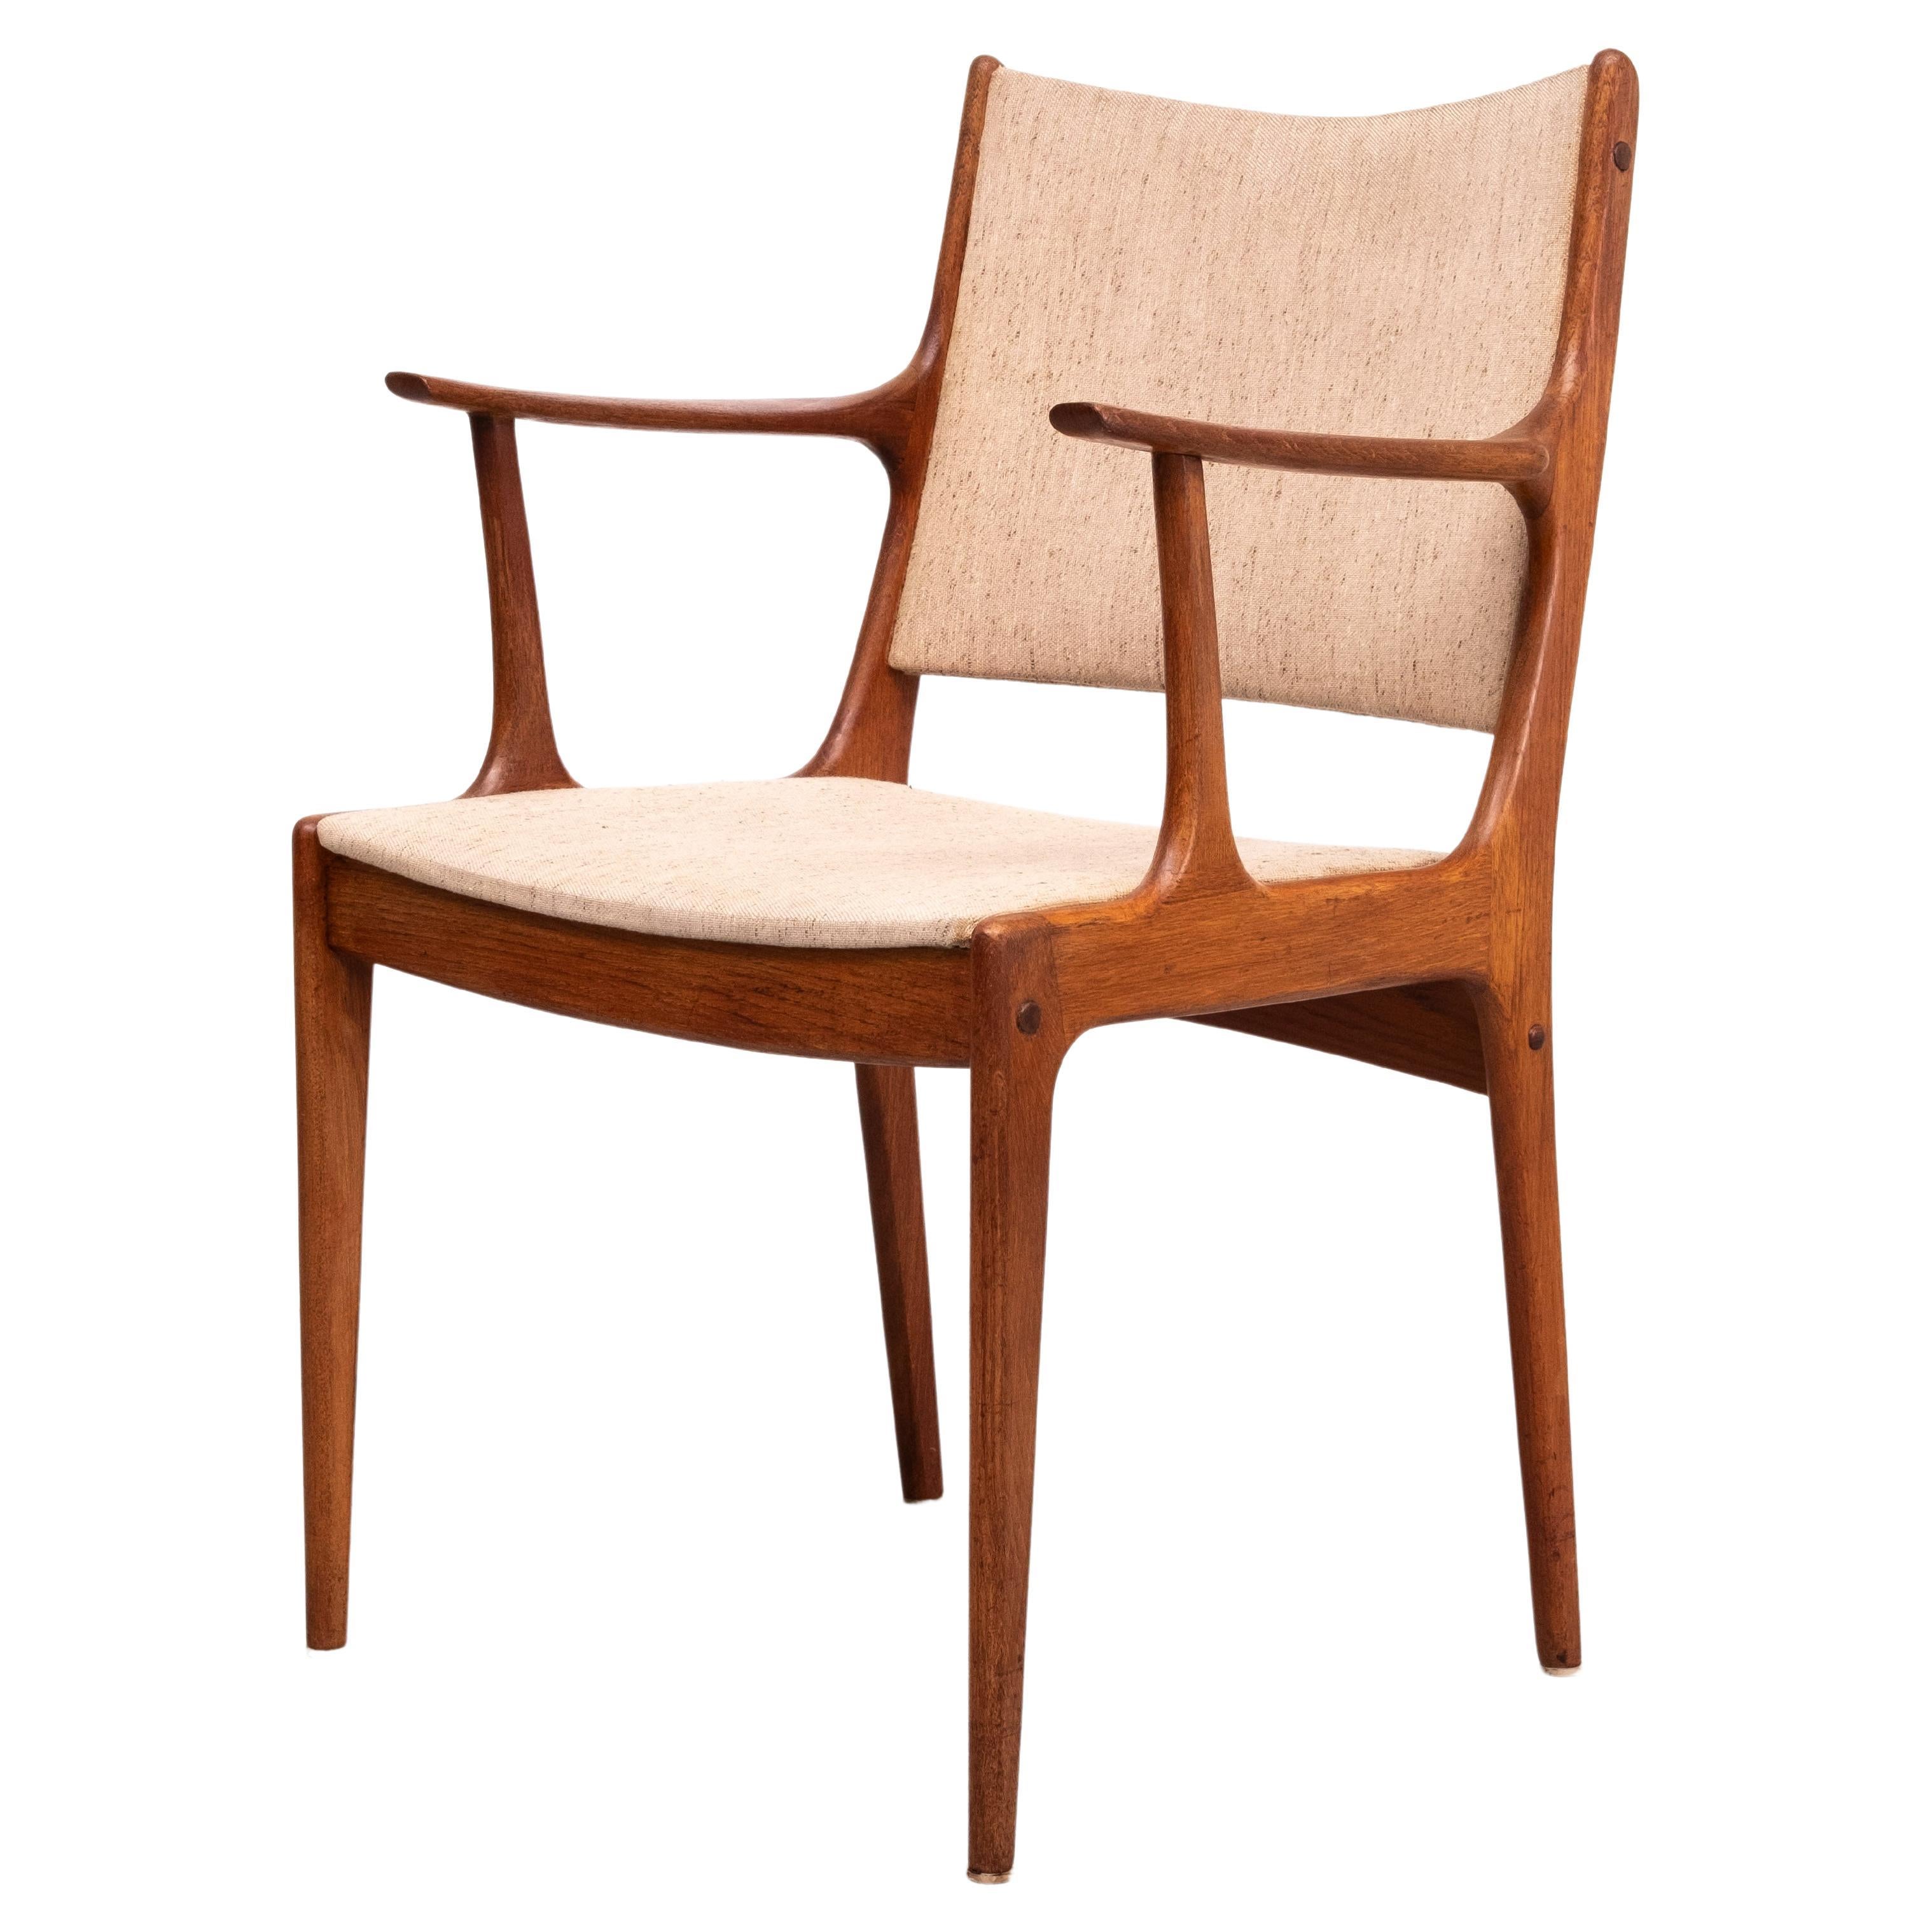  Very nice curved armchair .Solid Teakwood . Design by  Johannes Andersen  For Sale